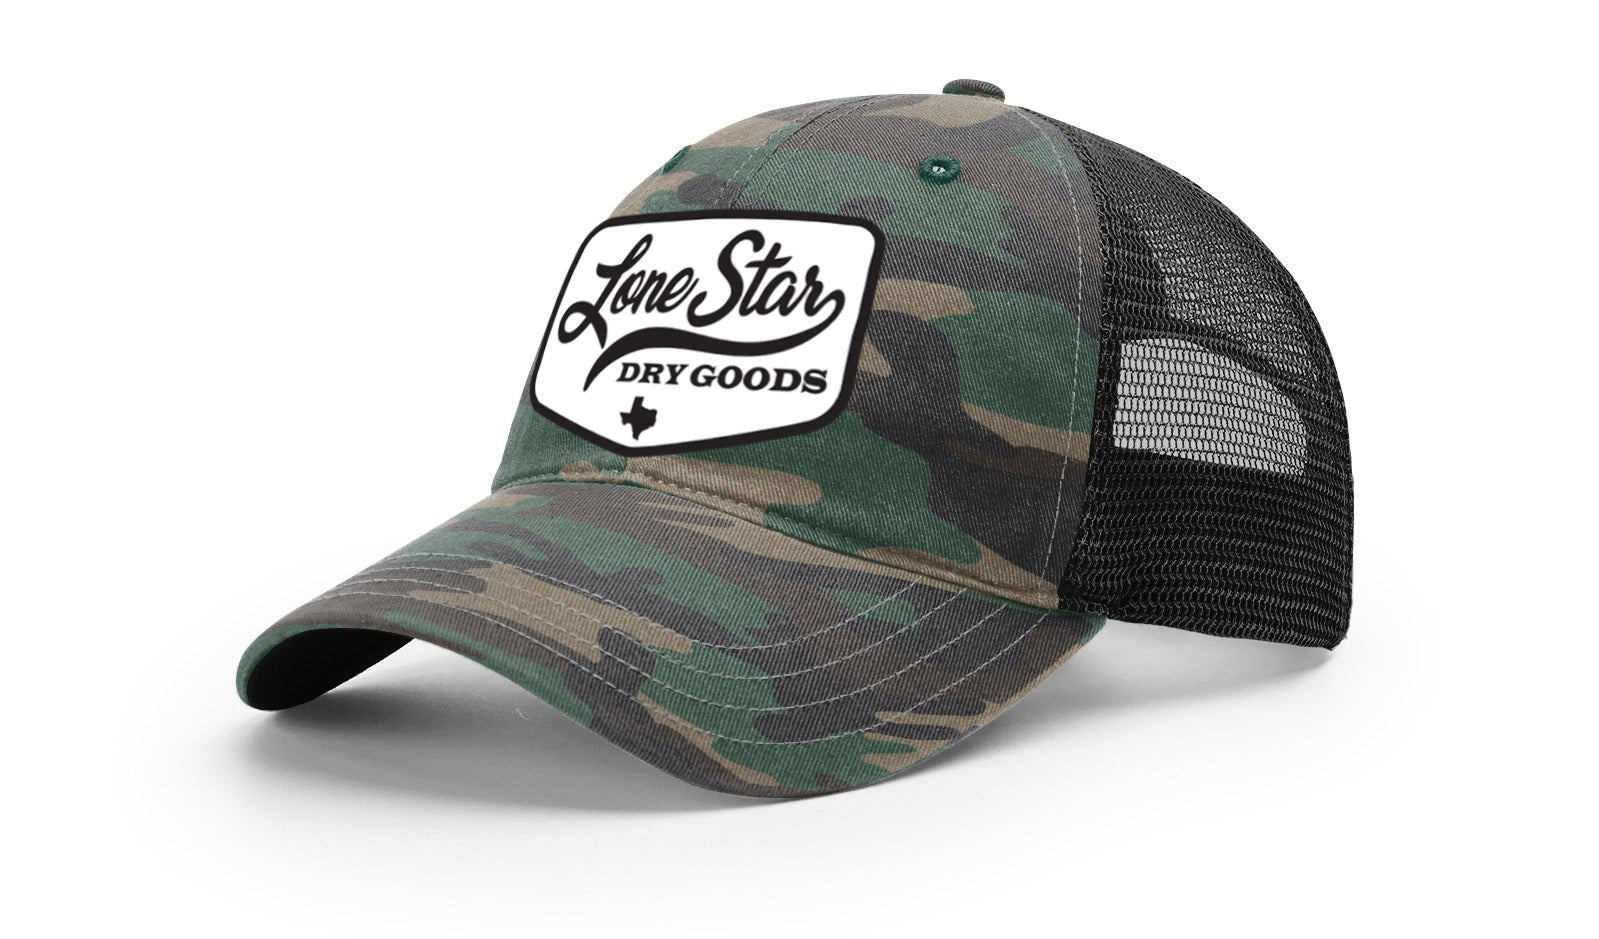 Trucker Goods Star – Camo Lone Dry Hat- LSDG Unstructured Green